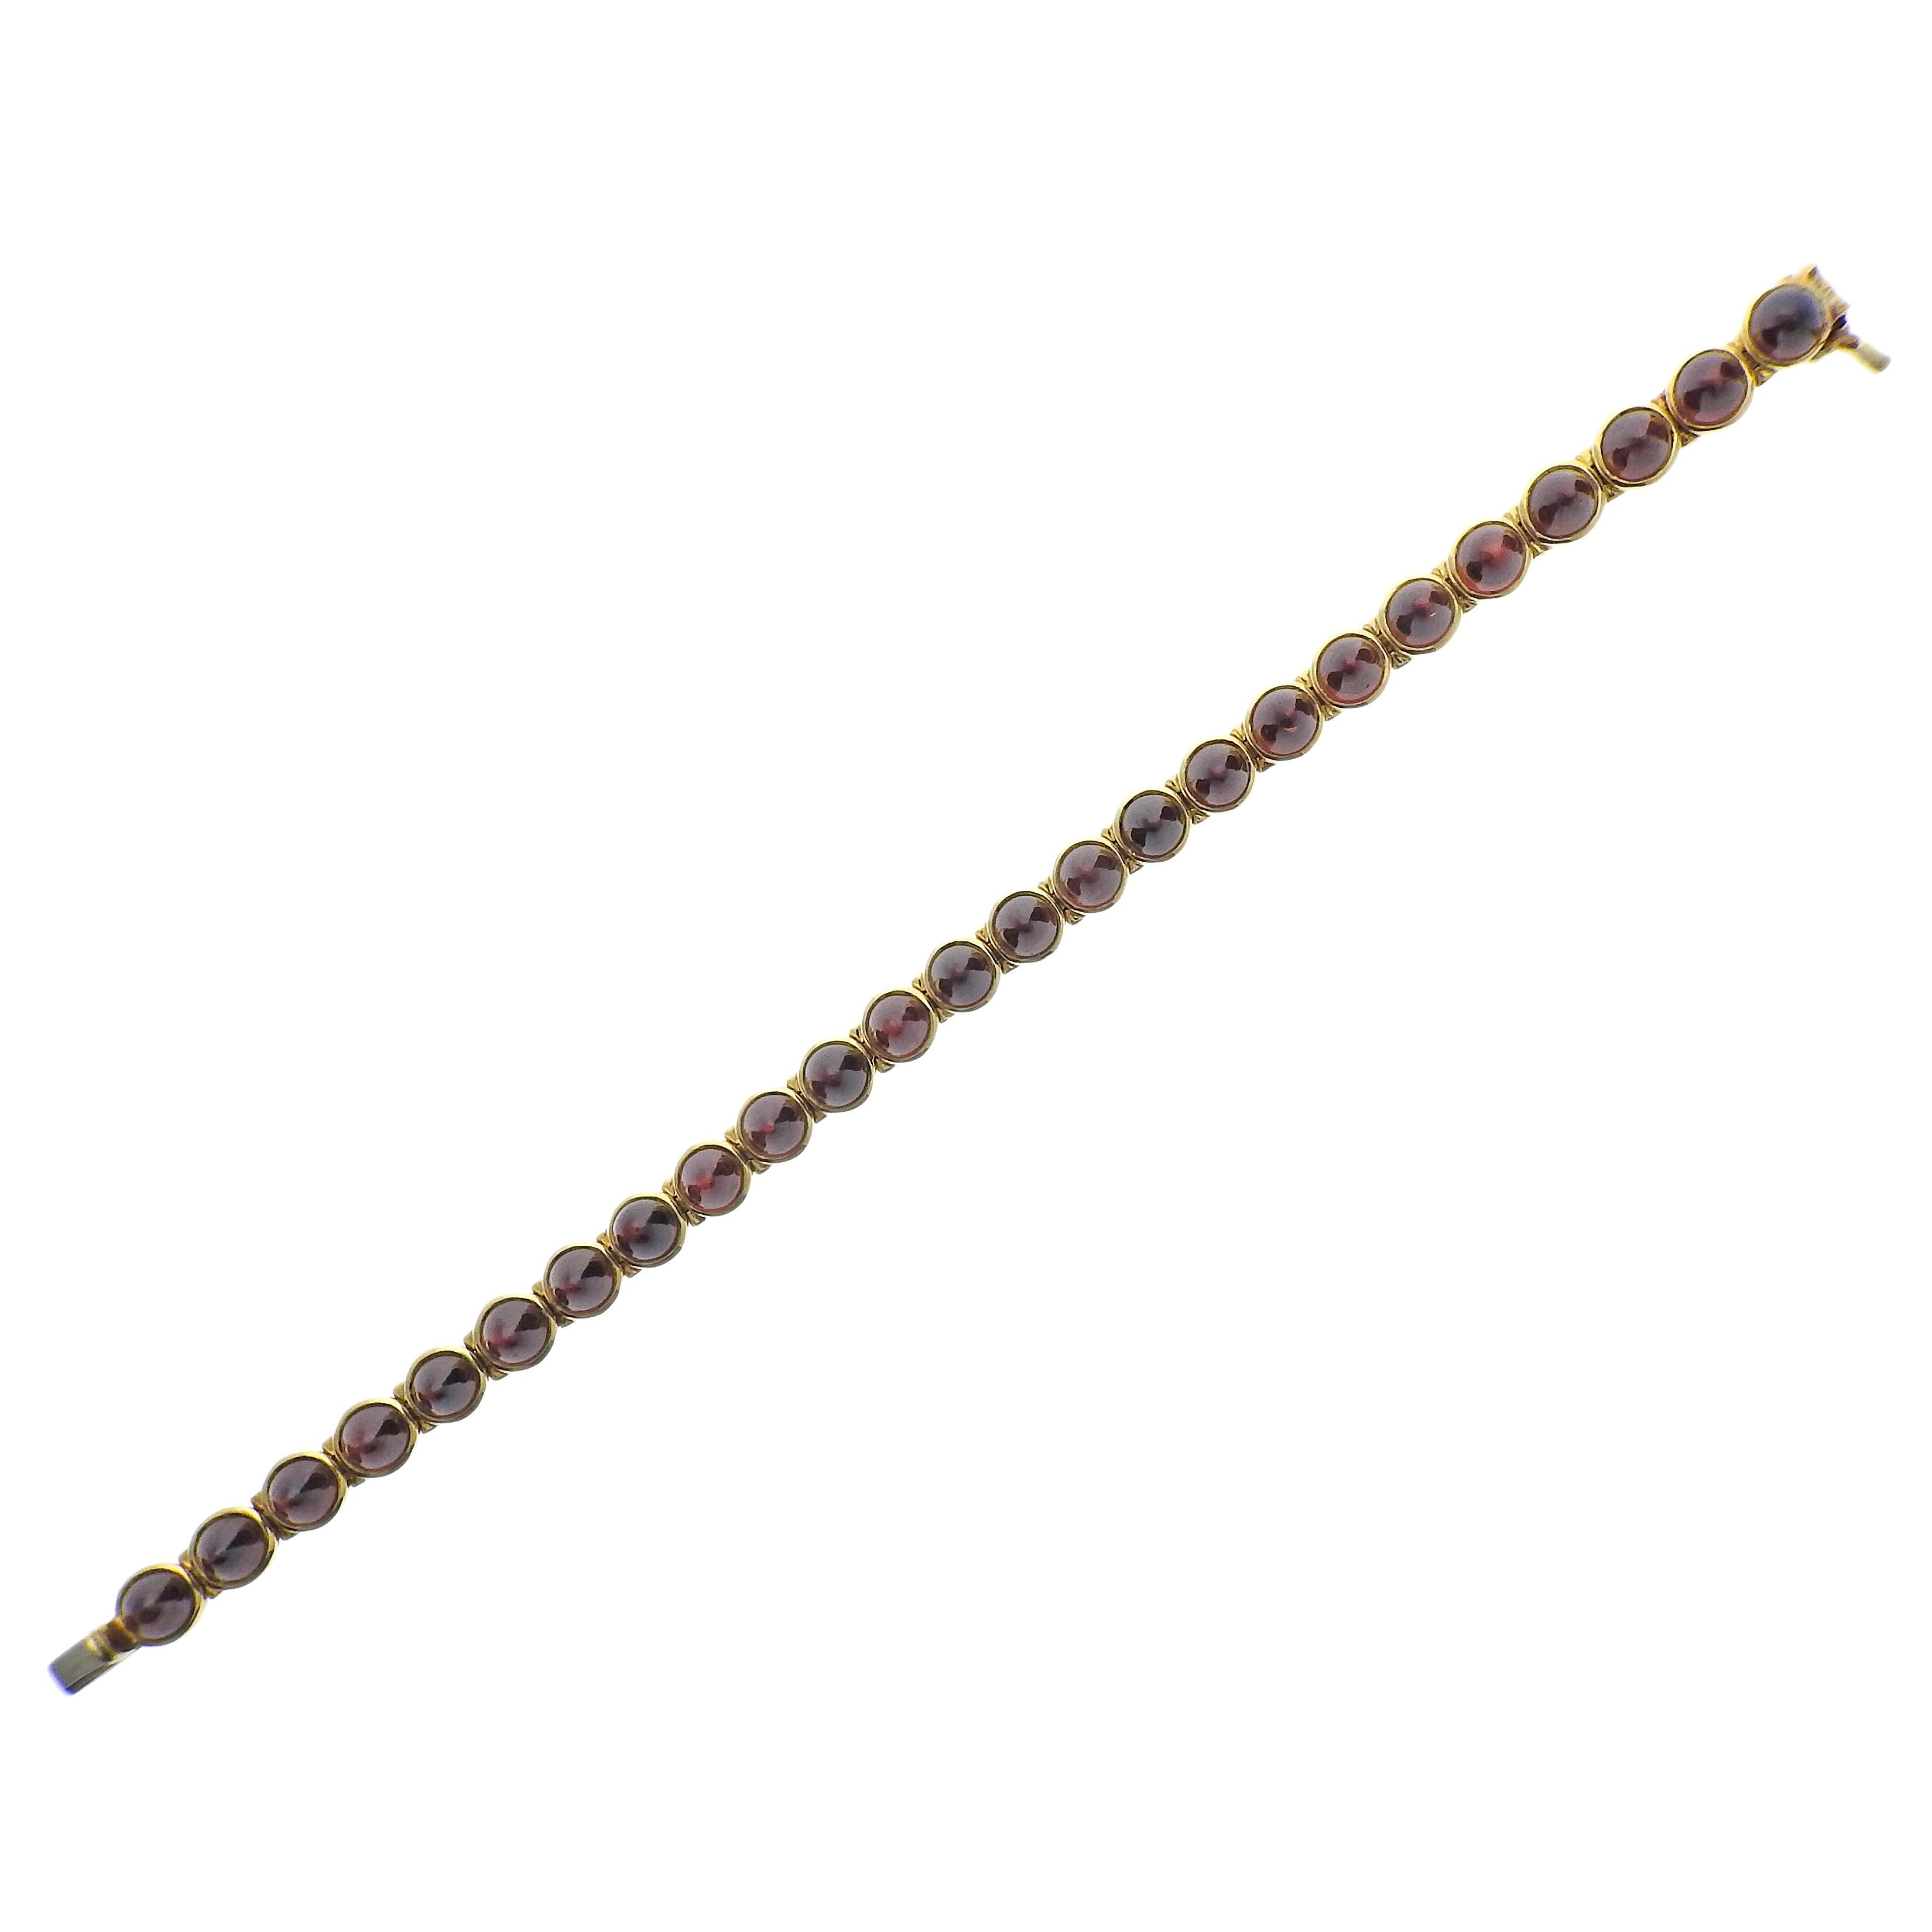 Laura Munder Garnet 18k Gold Bracelet. Bracelet measures 7 1/4